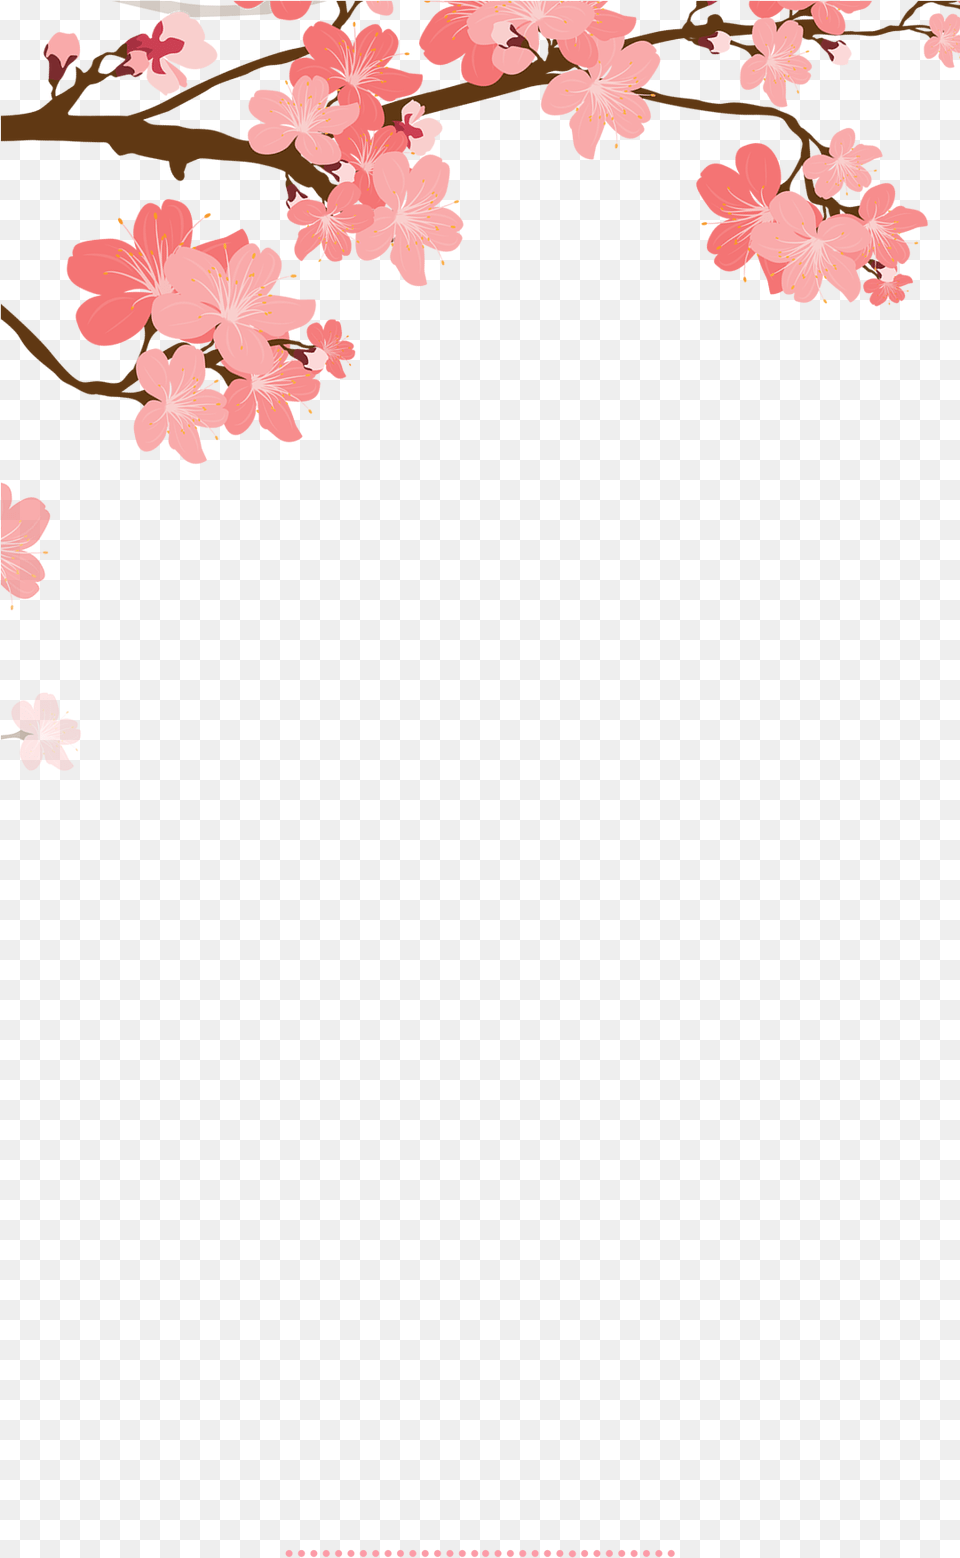 Snapchat Filters Wedding Danke Rosa Kirschblten Blumenpostkarte Postkarte, Flower, Plant, Petal, Cherry Blossom Png